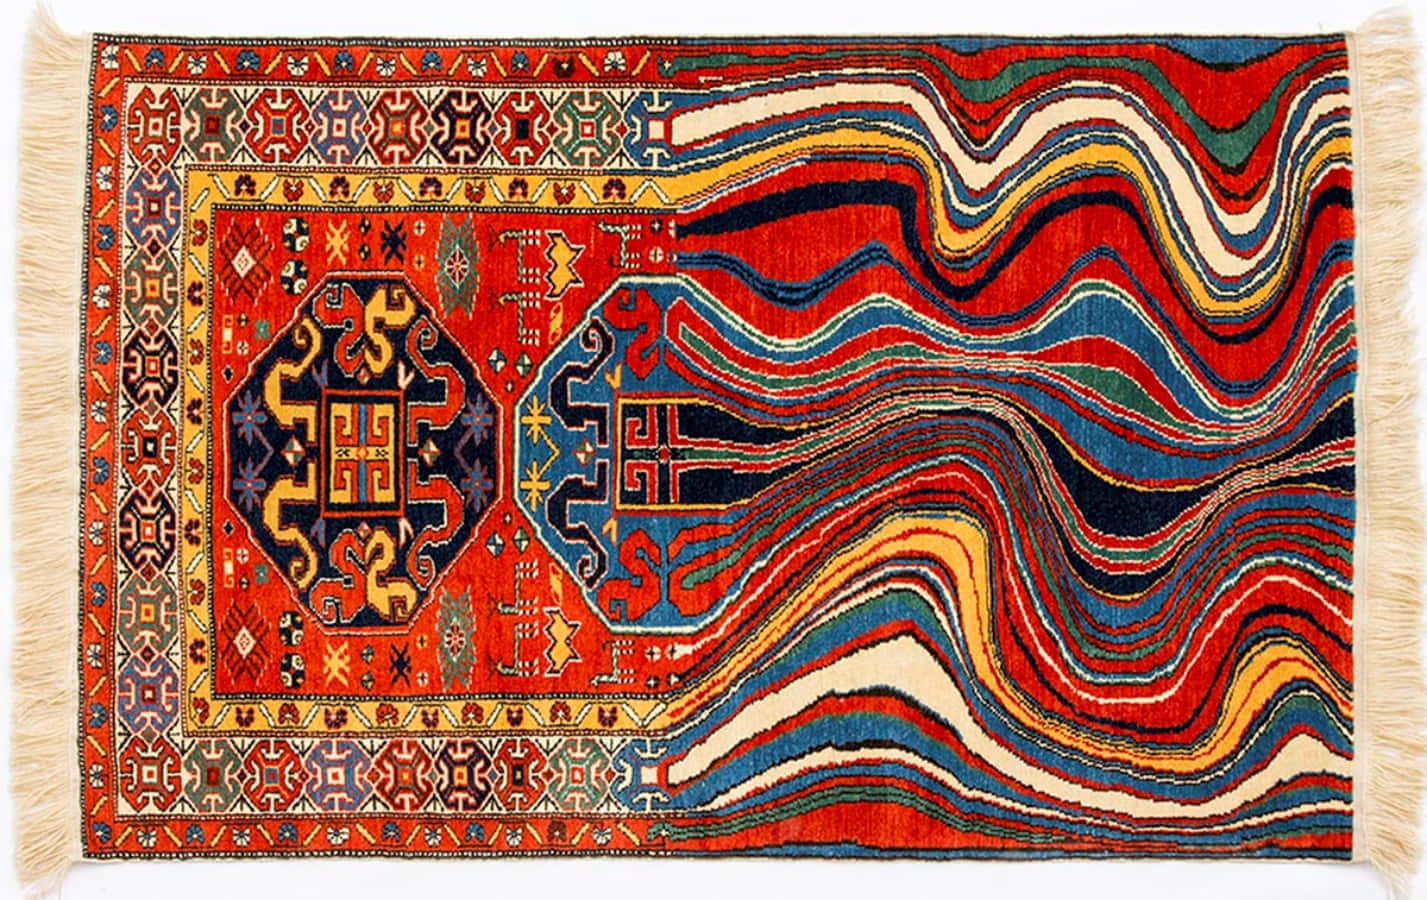 Colorful Textile Artwork Wallpaper